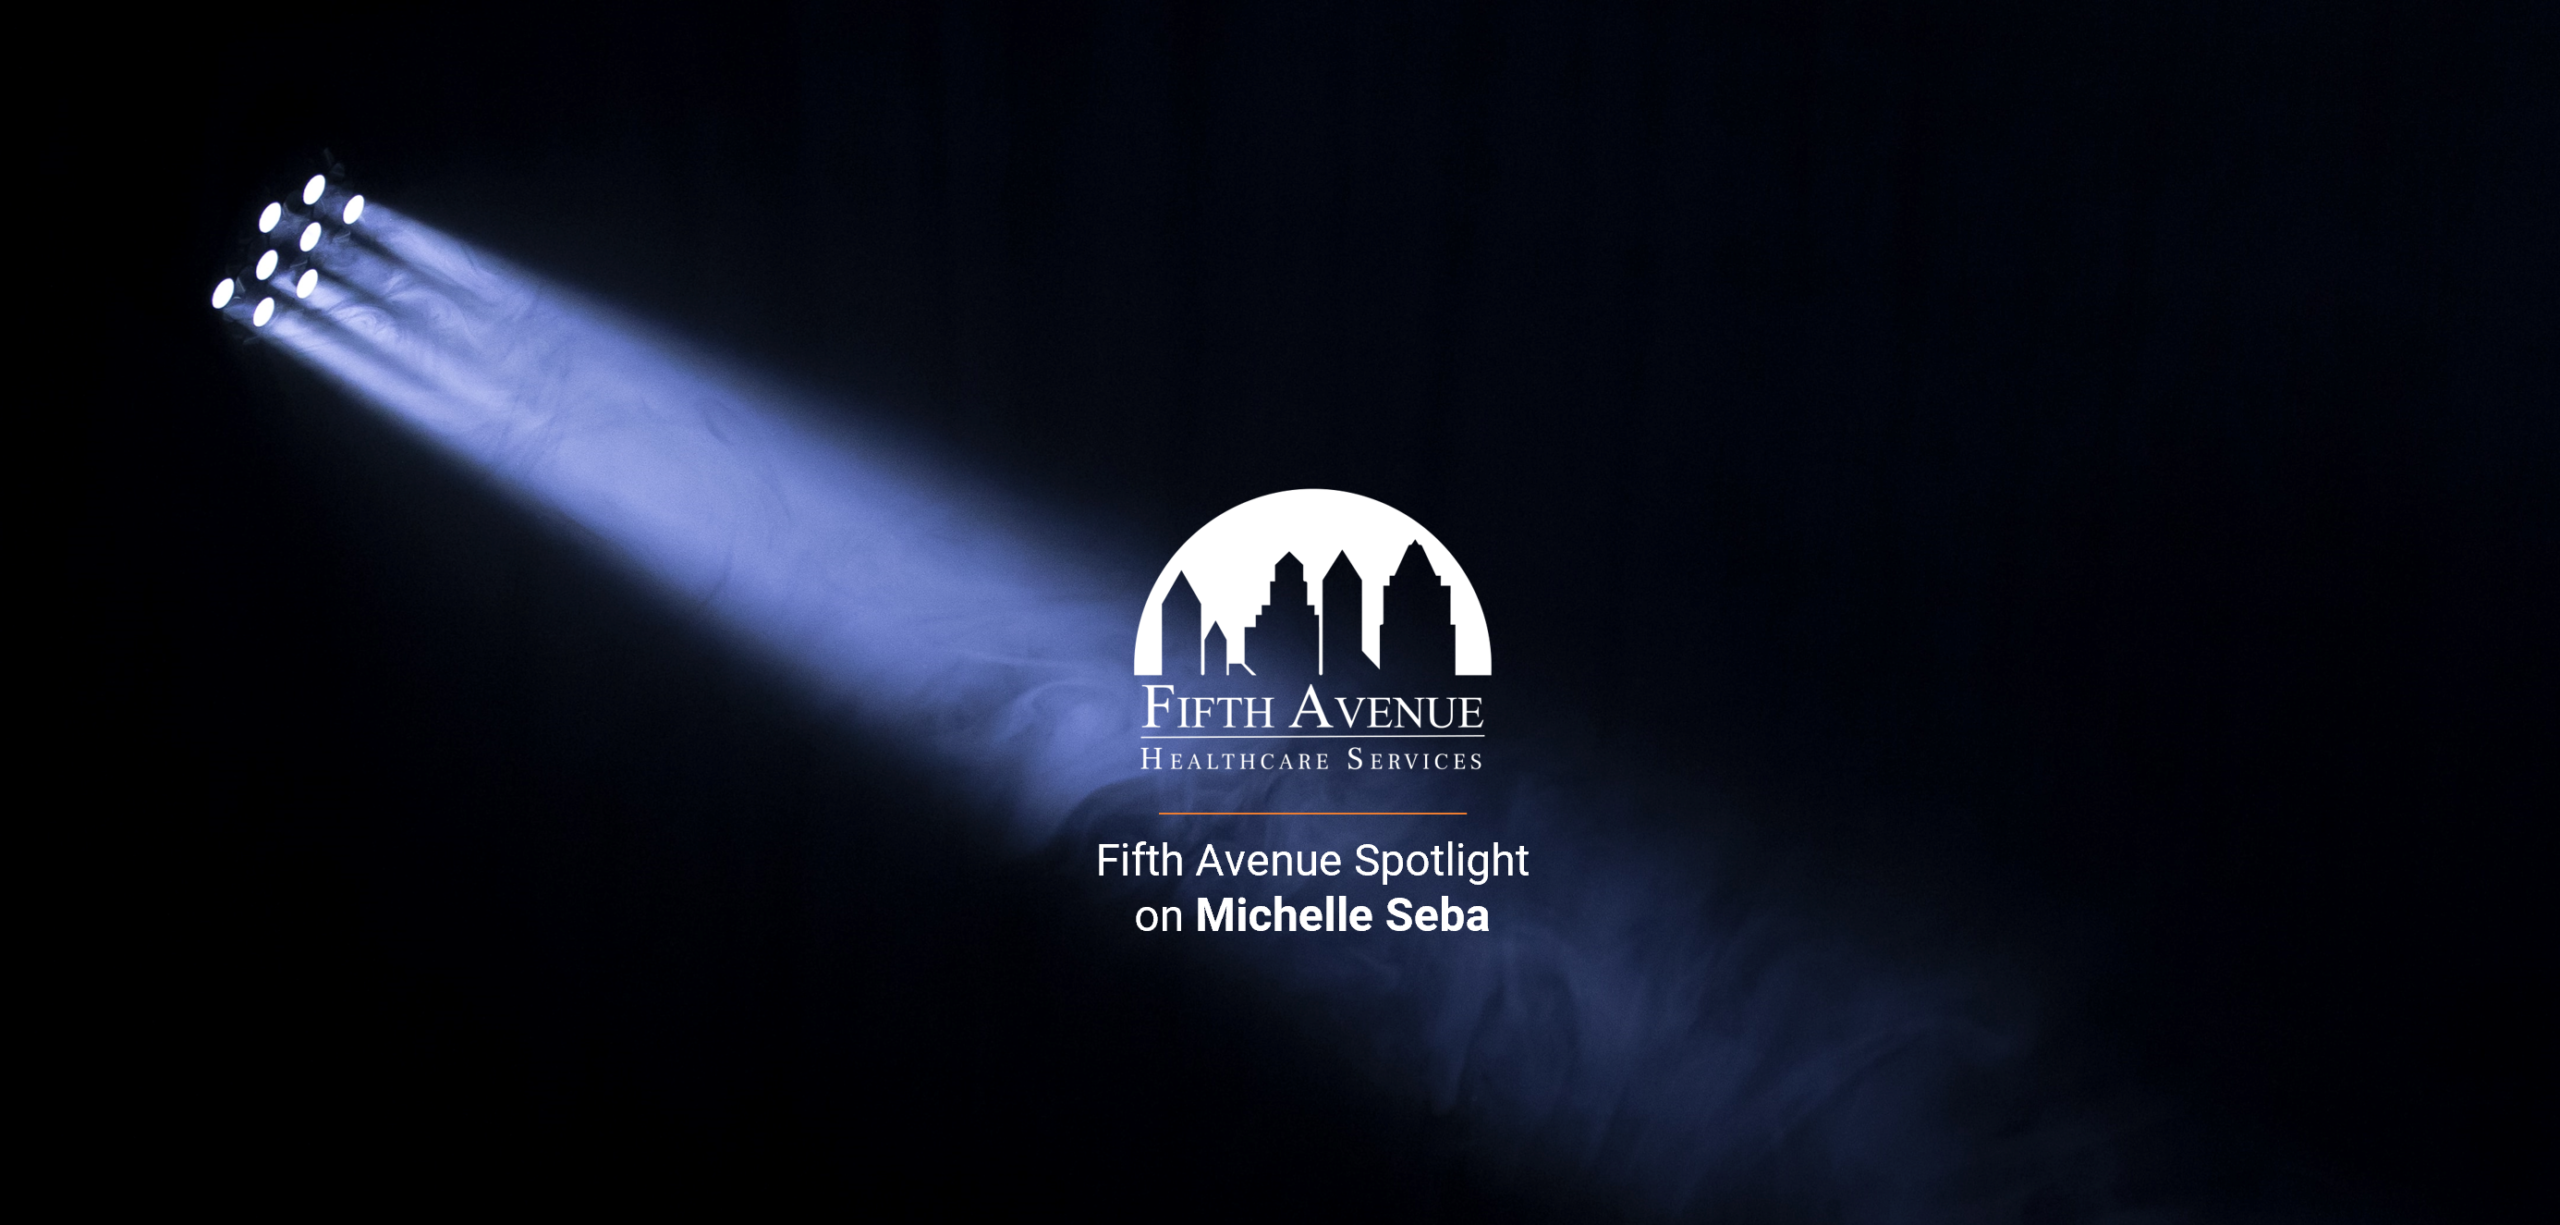 FifthAvenueHealthcareServices.com Fifth Avenue Spotlight on Michelle Seba